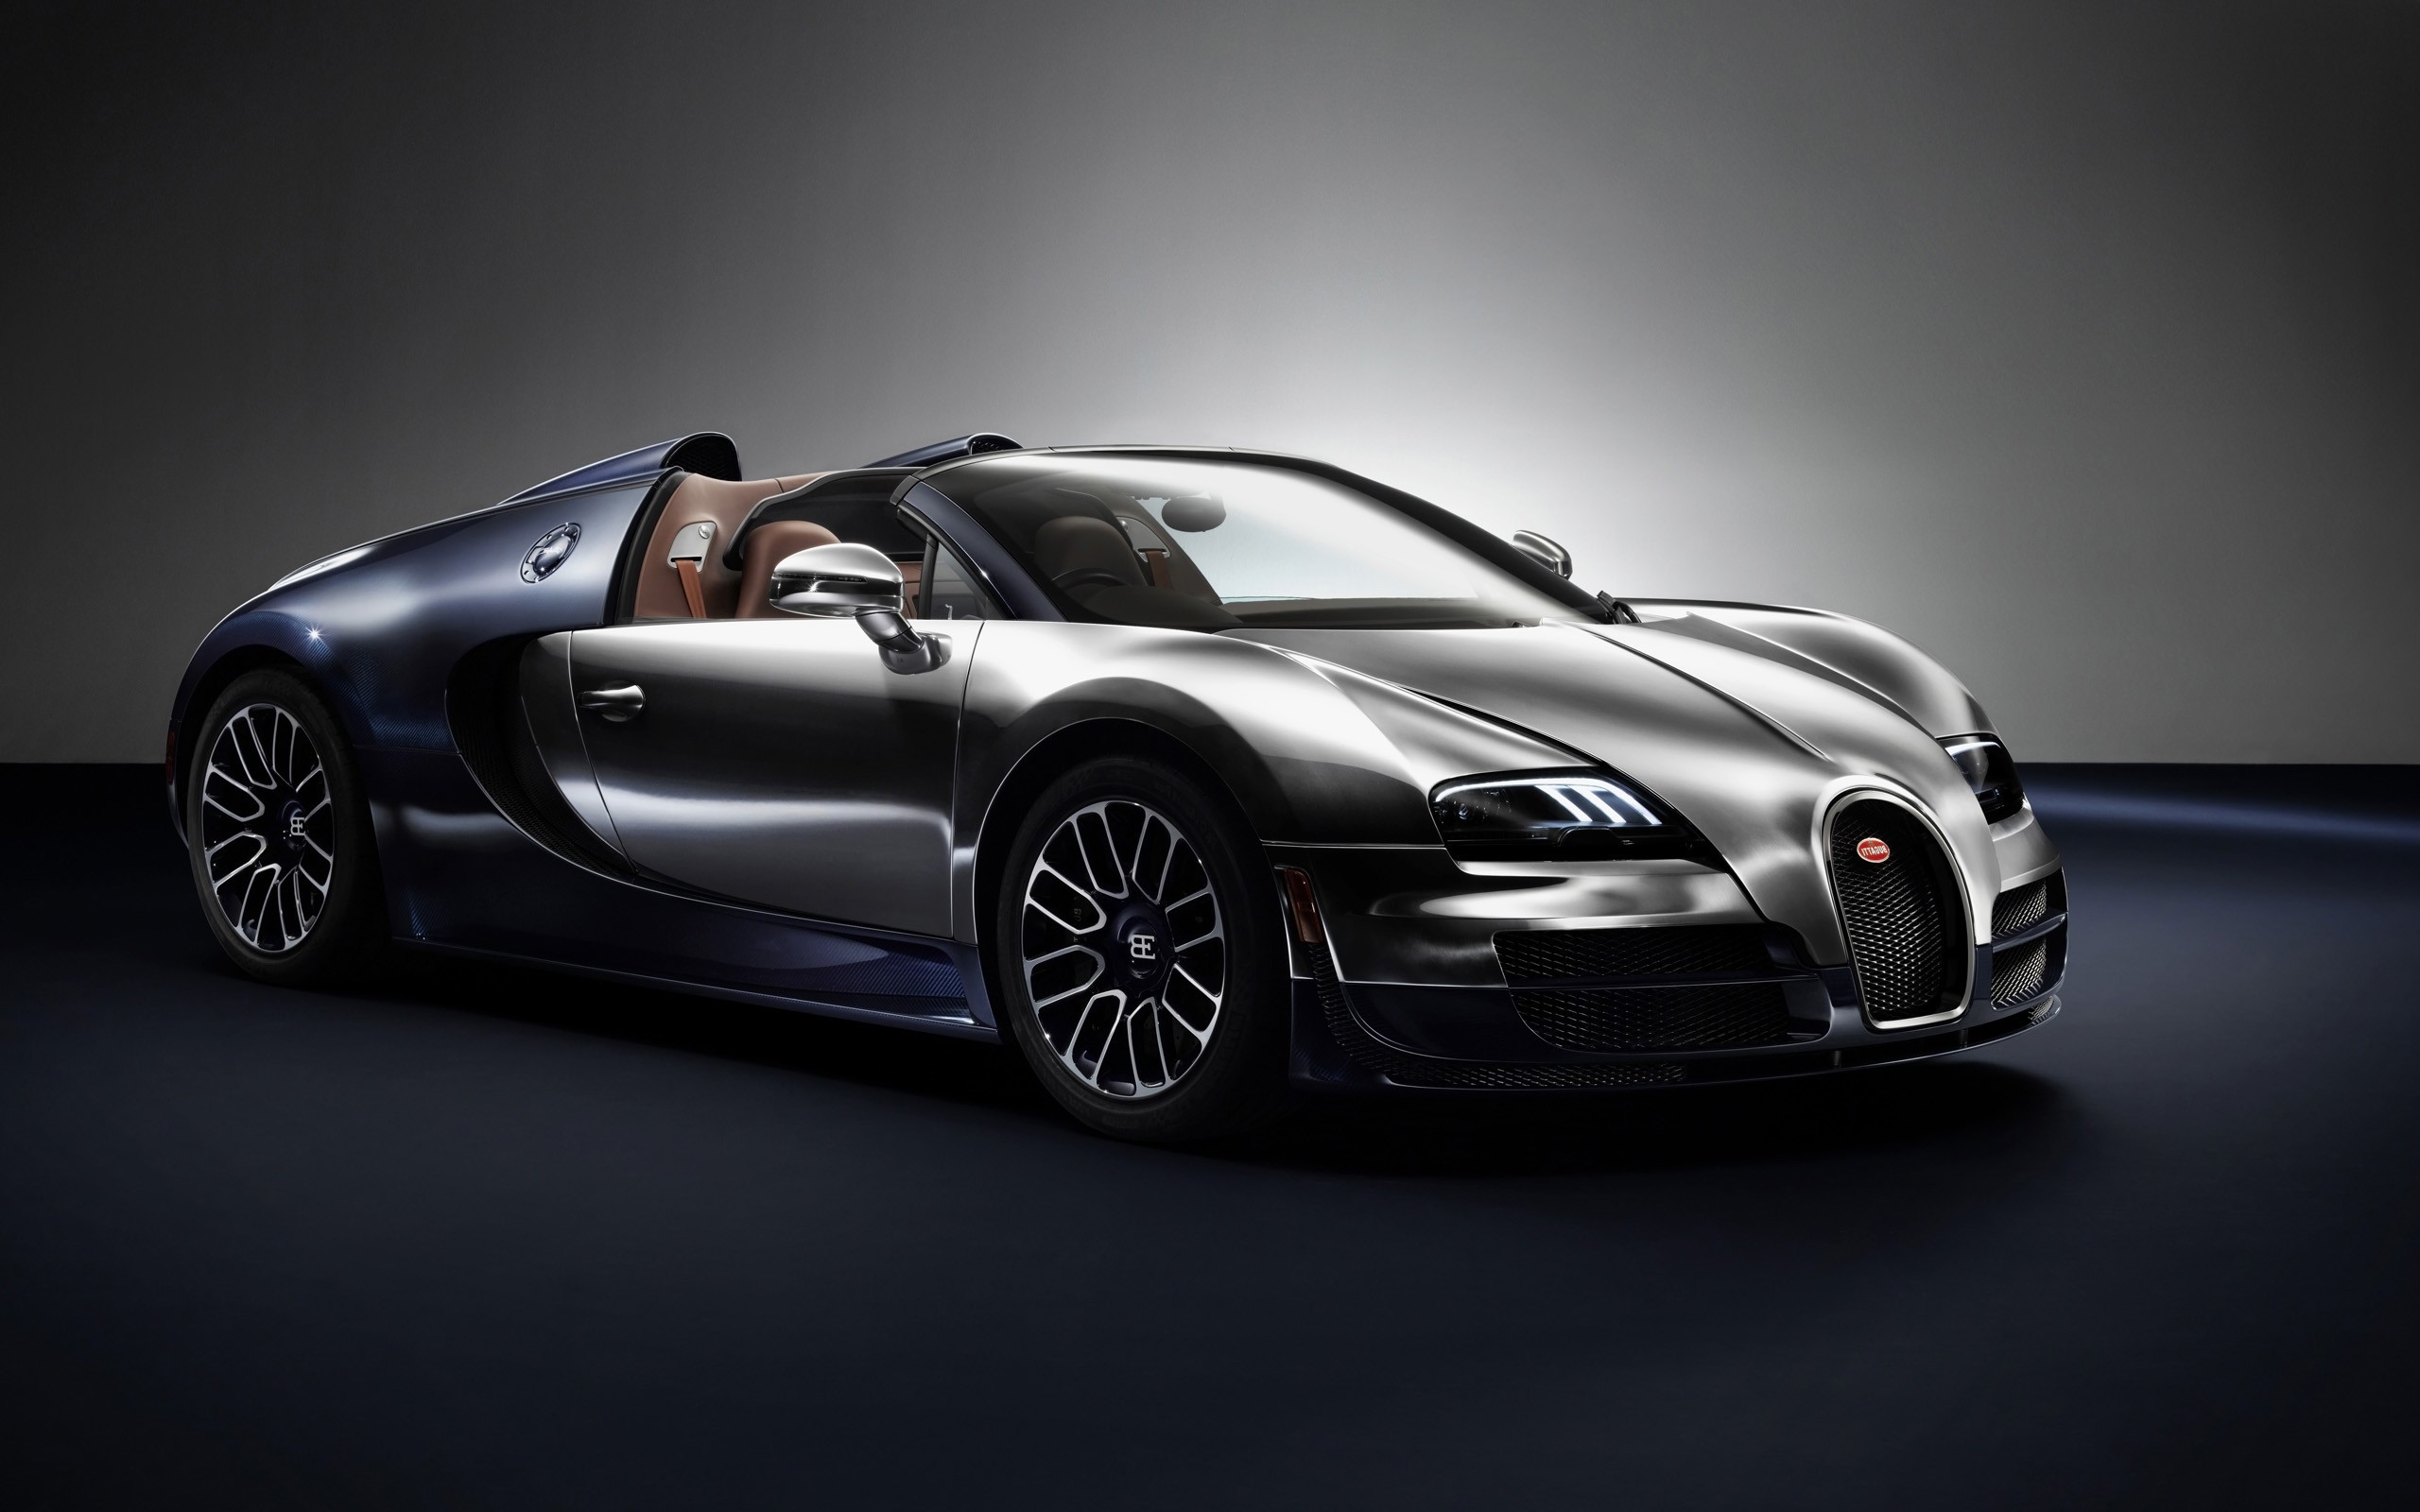 Wallpapers Bugatti Veyron cars custom on the desktop